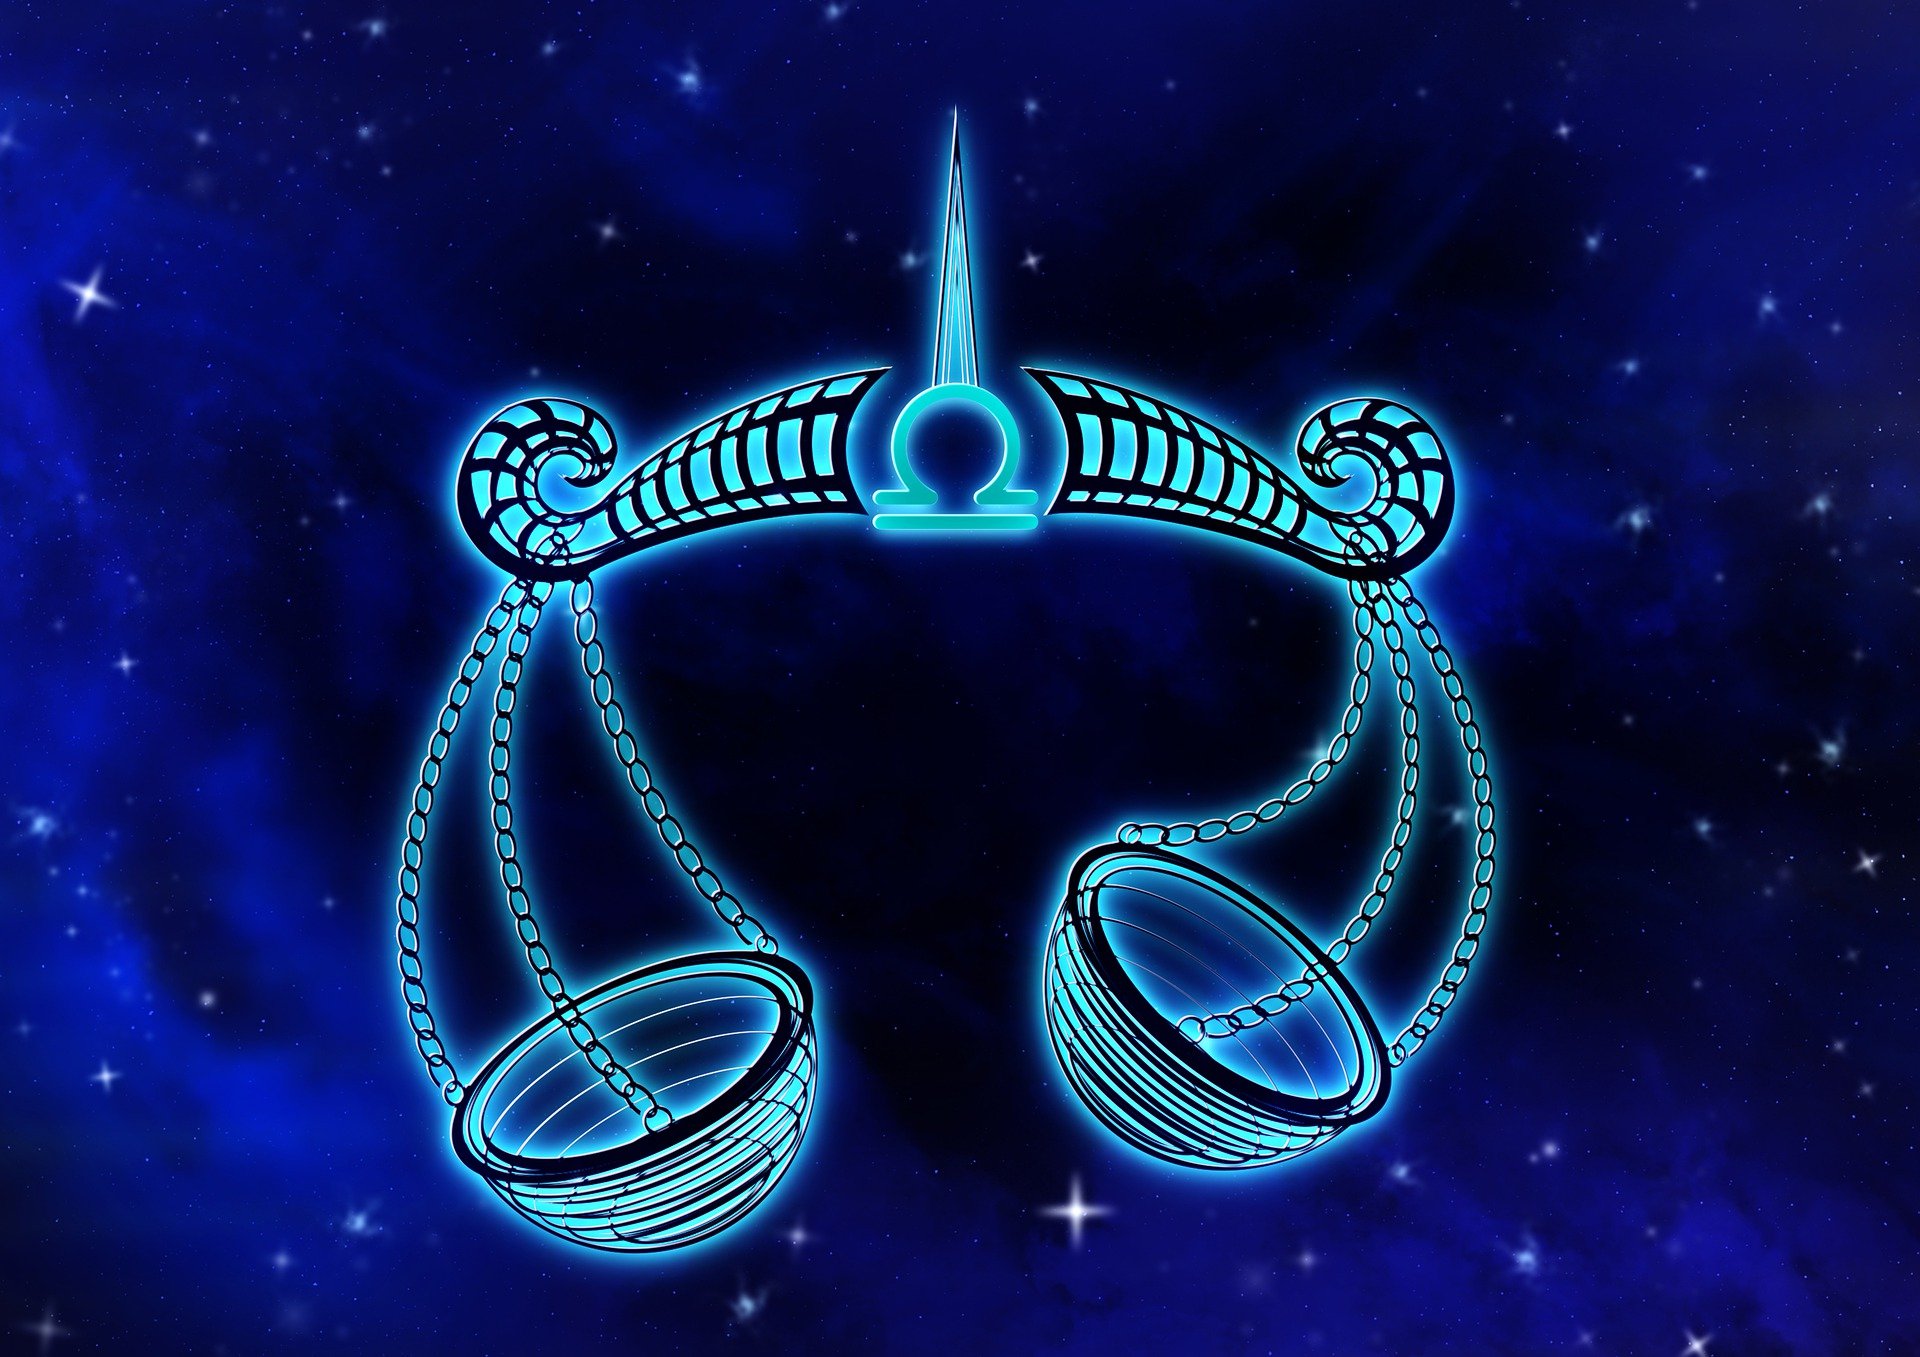 An illustration of a Libra star sign | Source: Pixabay 